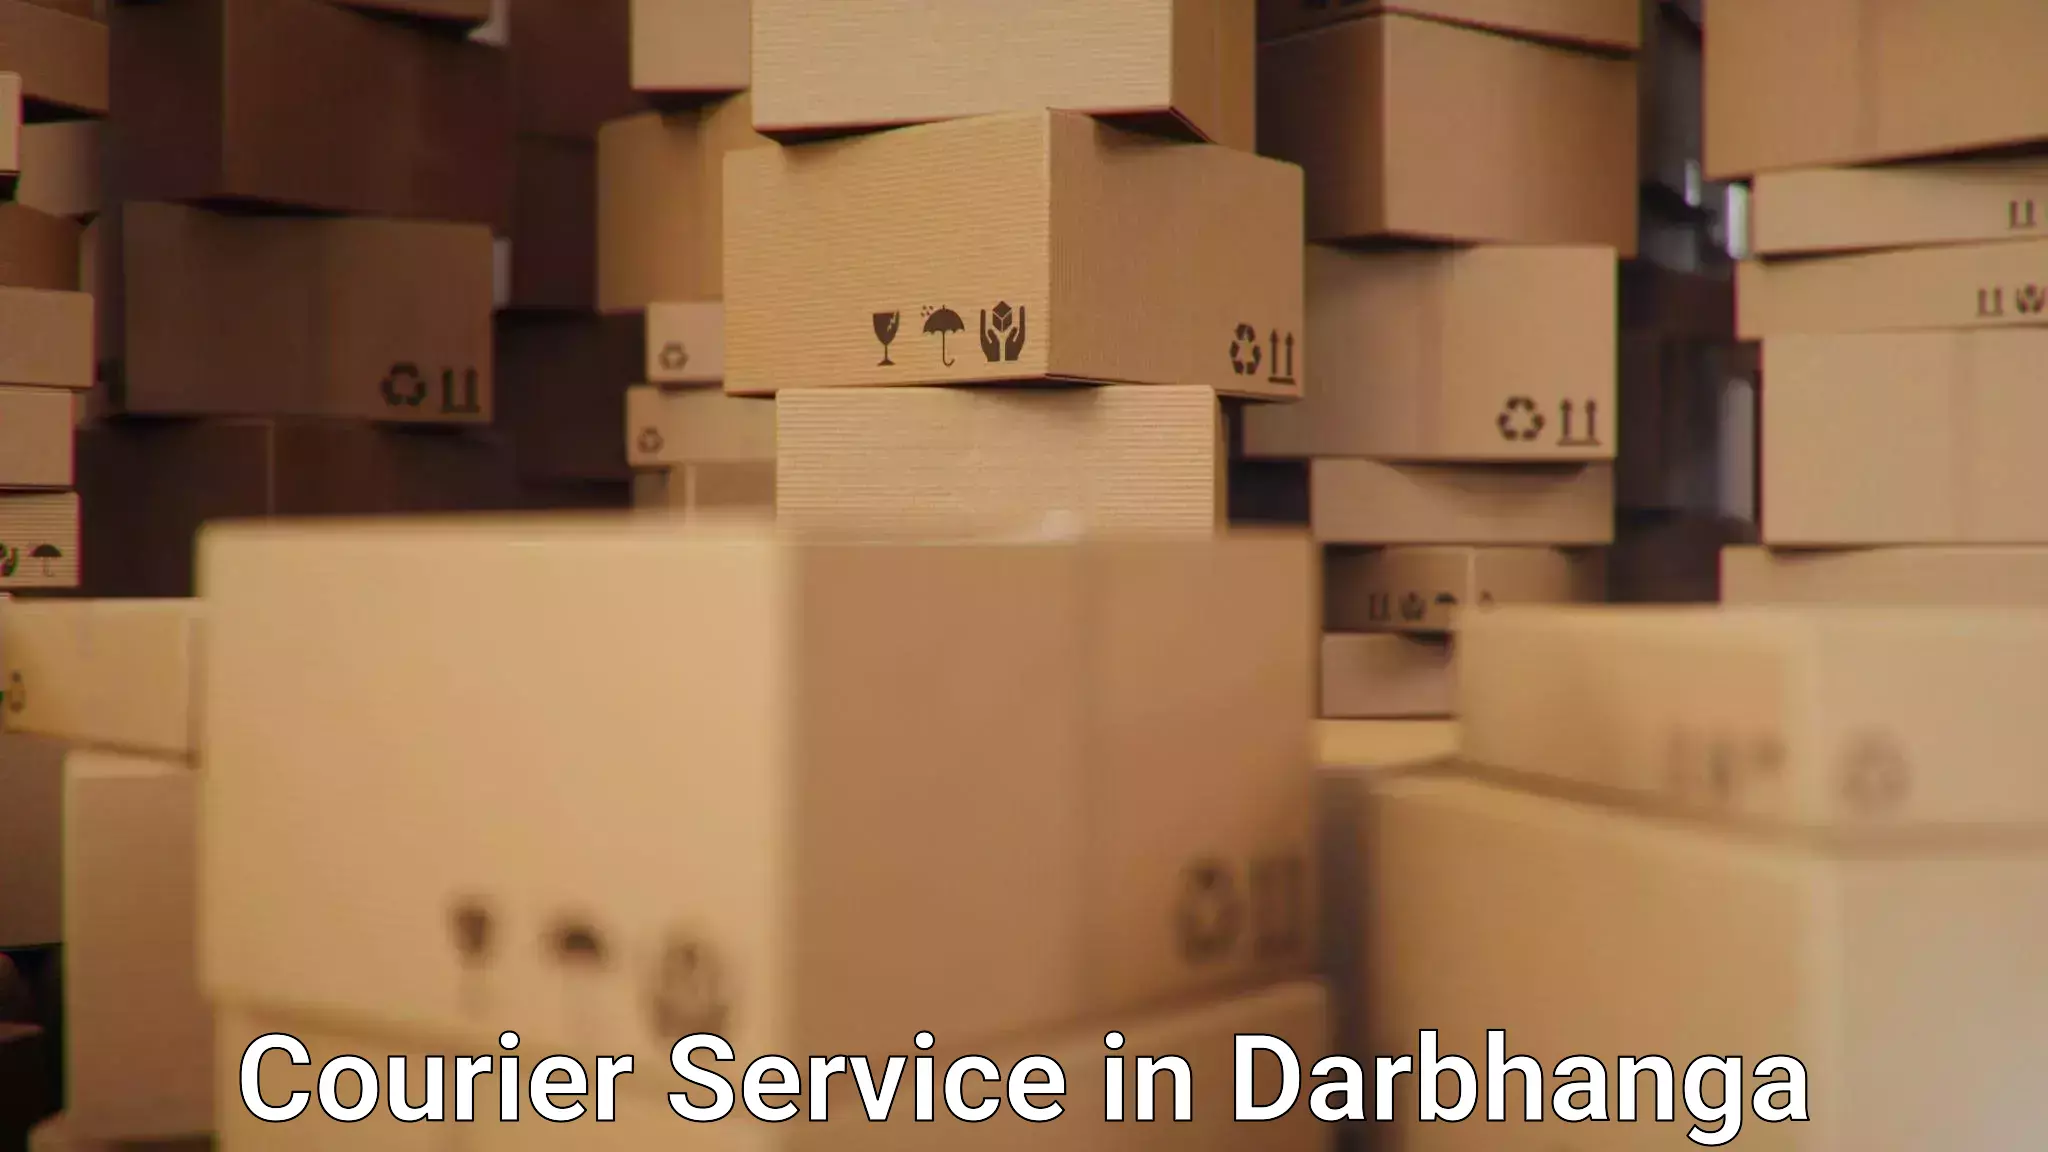 E-commerce logistics support in Darbhanga